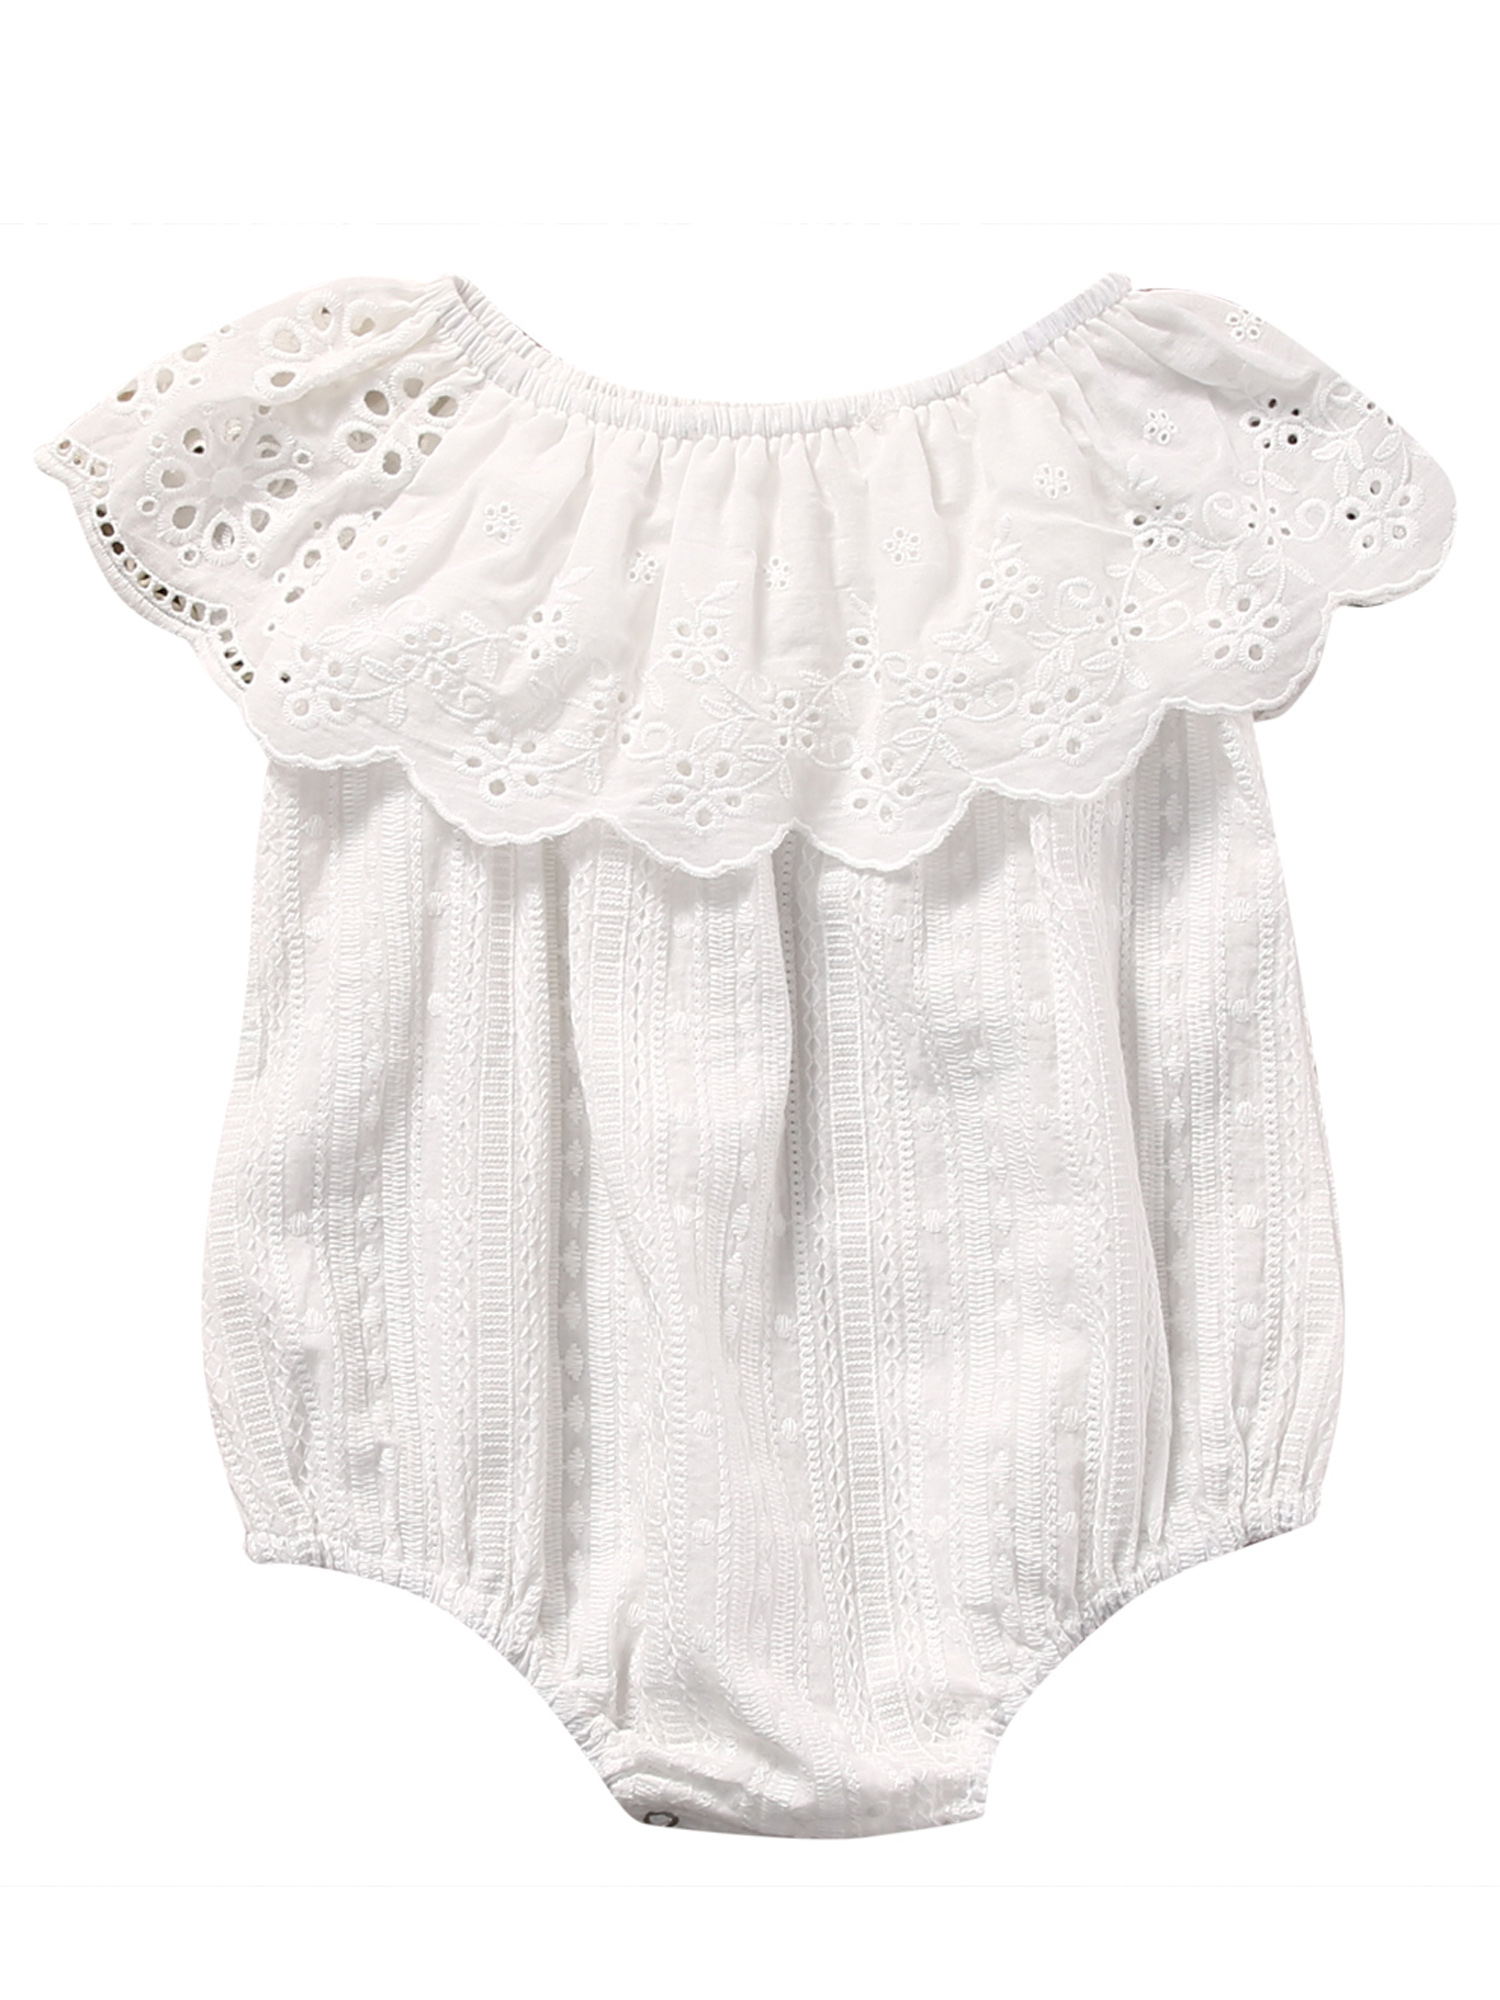 Pudcoco Newborn Infant Baby Girl Bodysuit Lace Romper Outfit Sunsuit ...